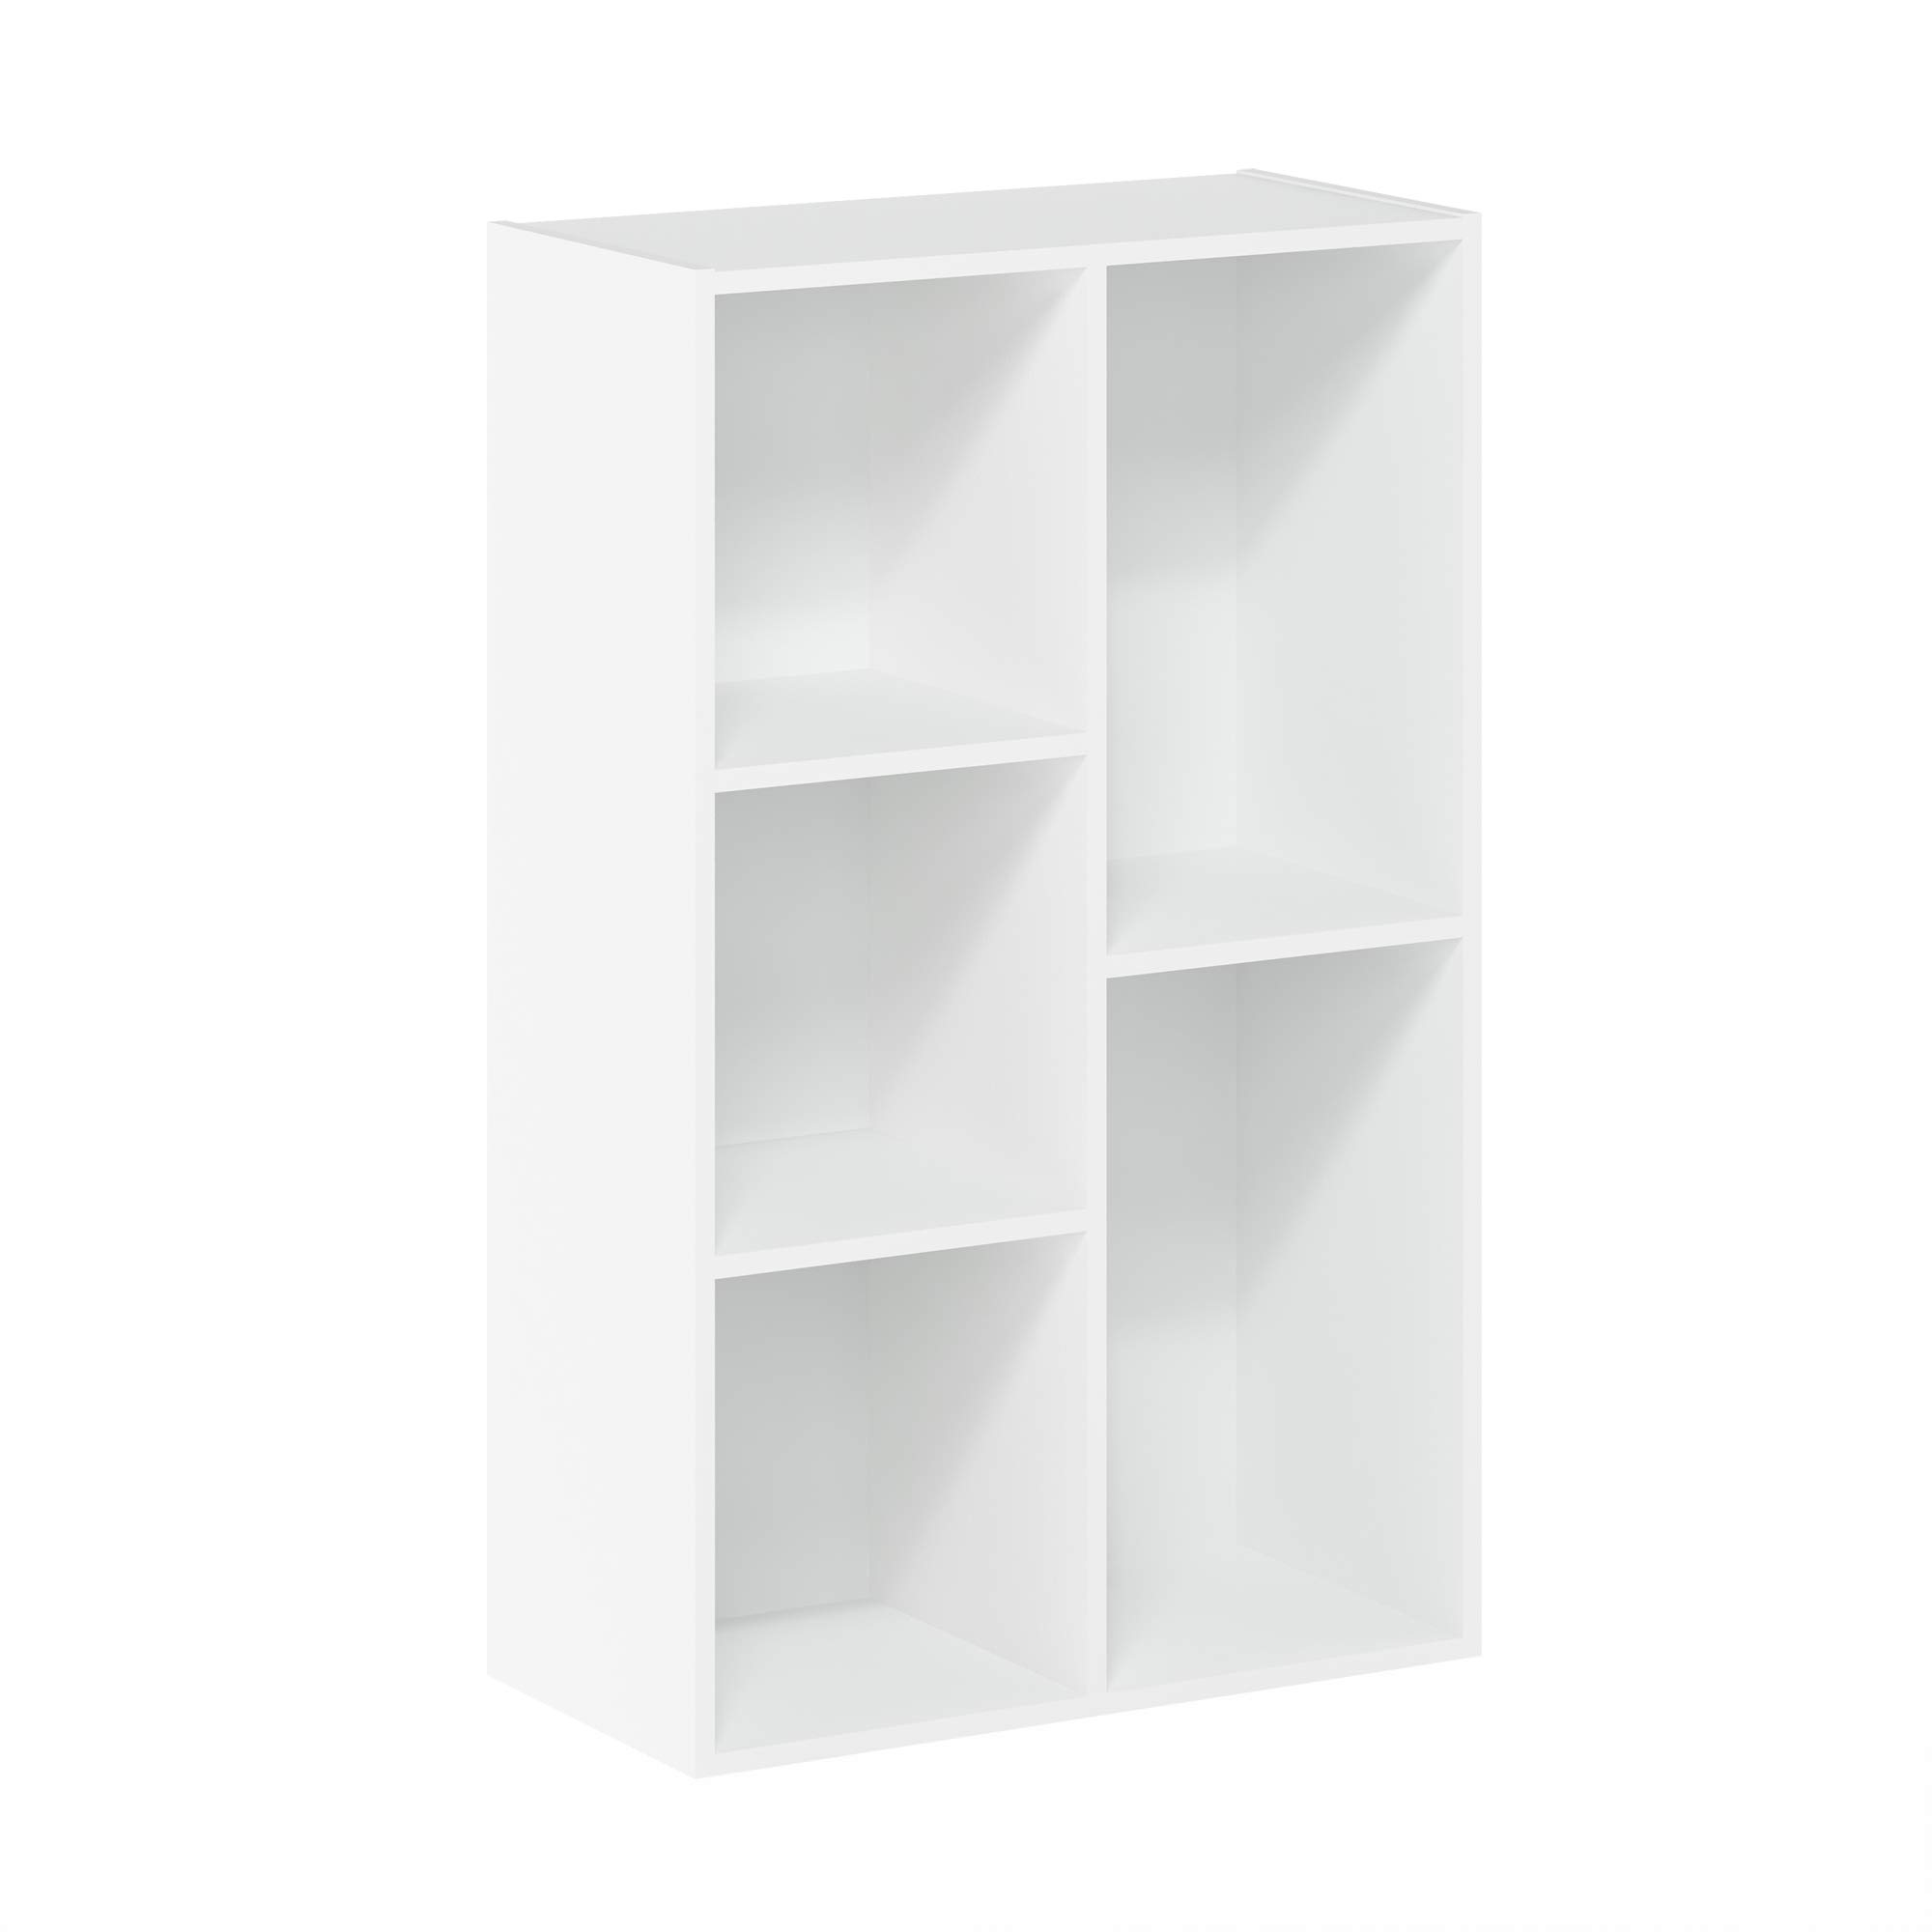 Wooden Open Shelf Bookcase Floor Yakamira Ratidza Cabinet Rack 5-Cube